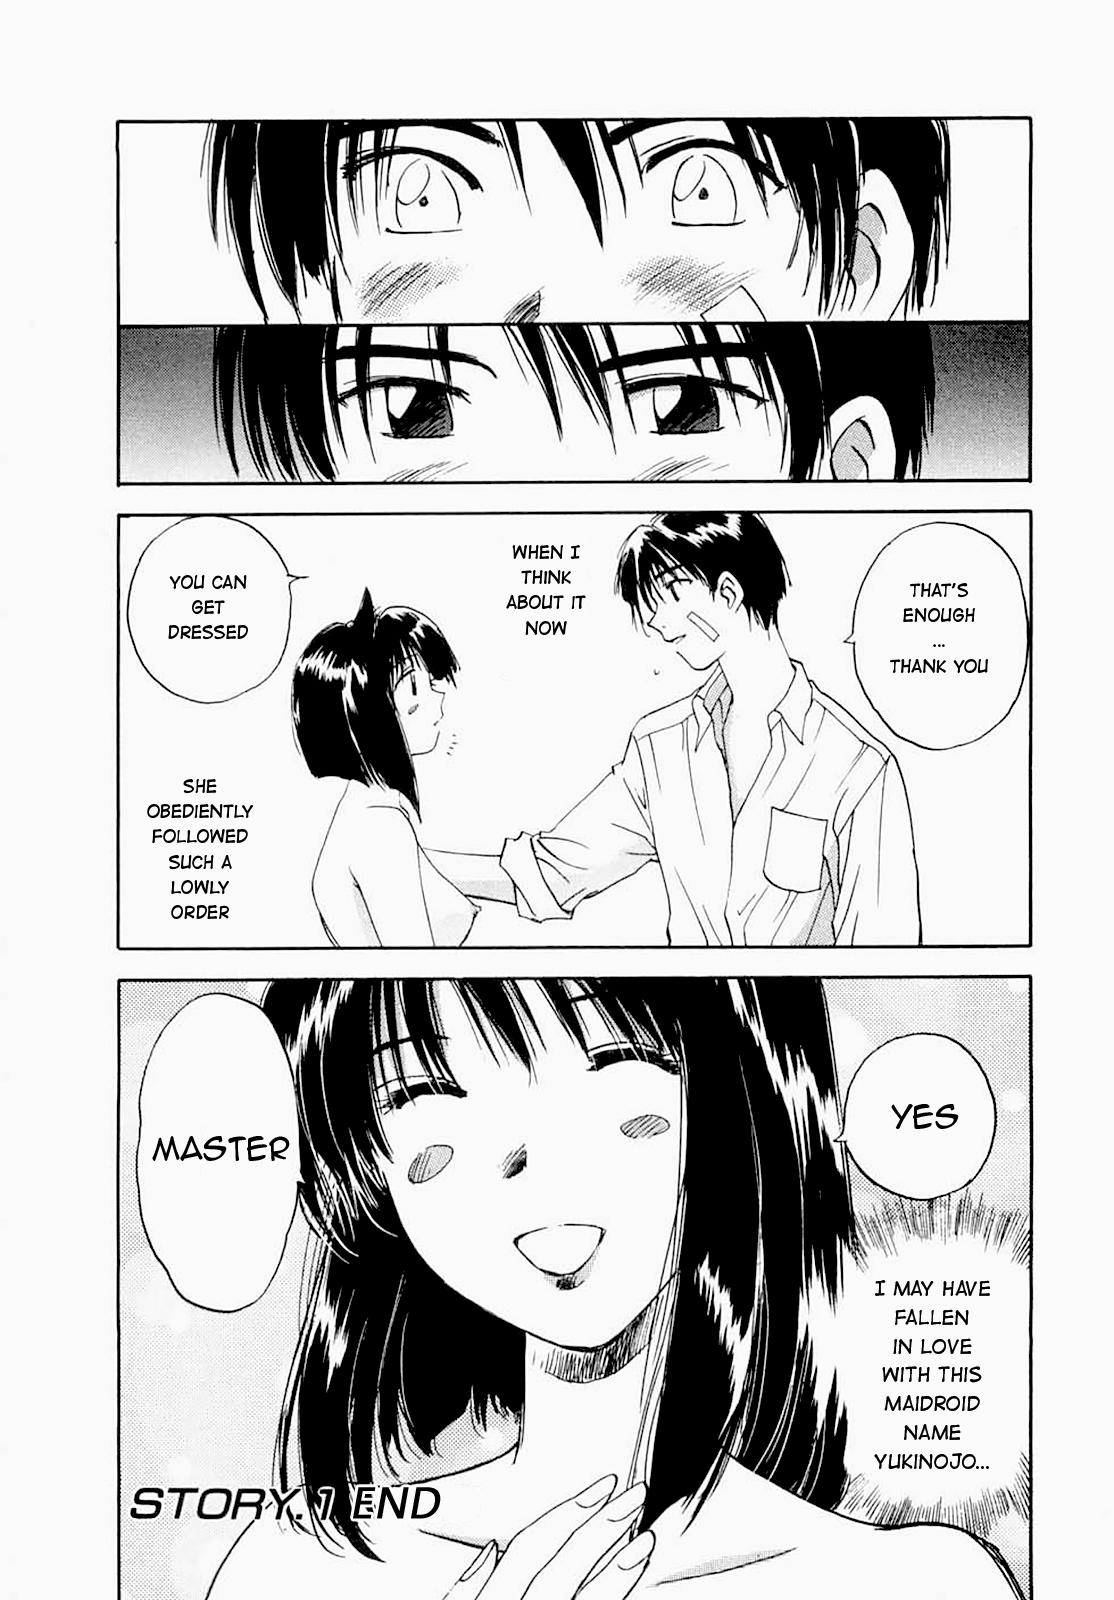 [Juichi Iogi] Maidroid Yukinojo Vol 1, Story 1 (Manga Sunday Comics) | [GynoidNeko] [English] [decensored] 24